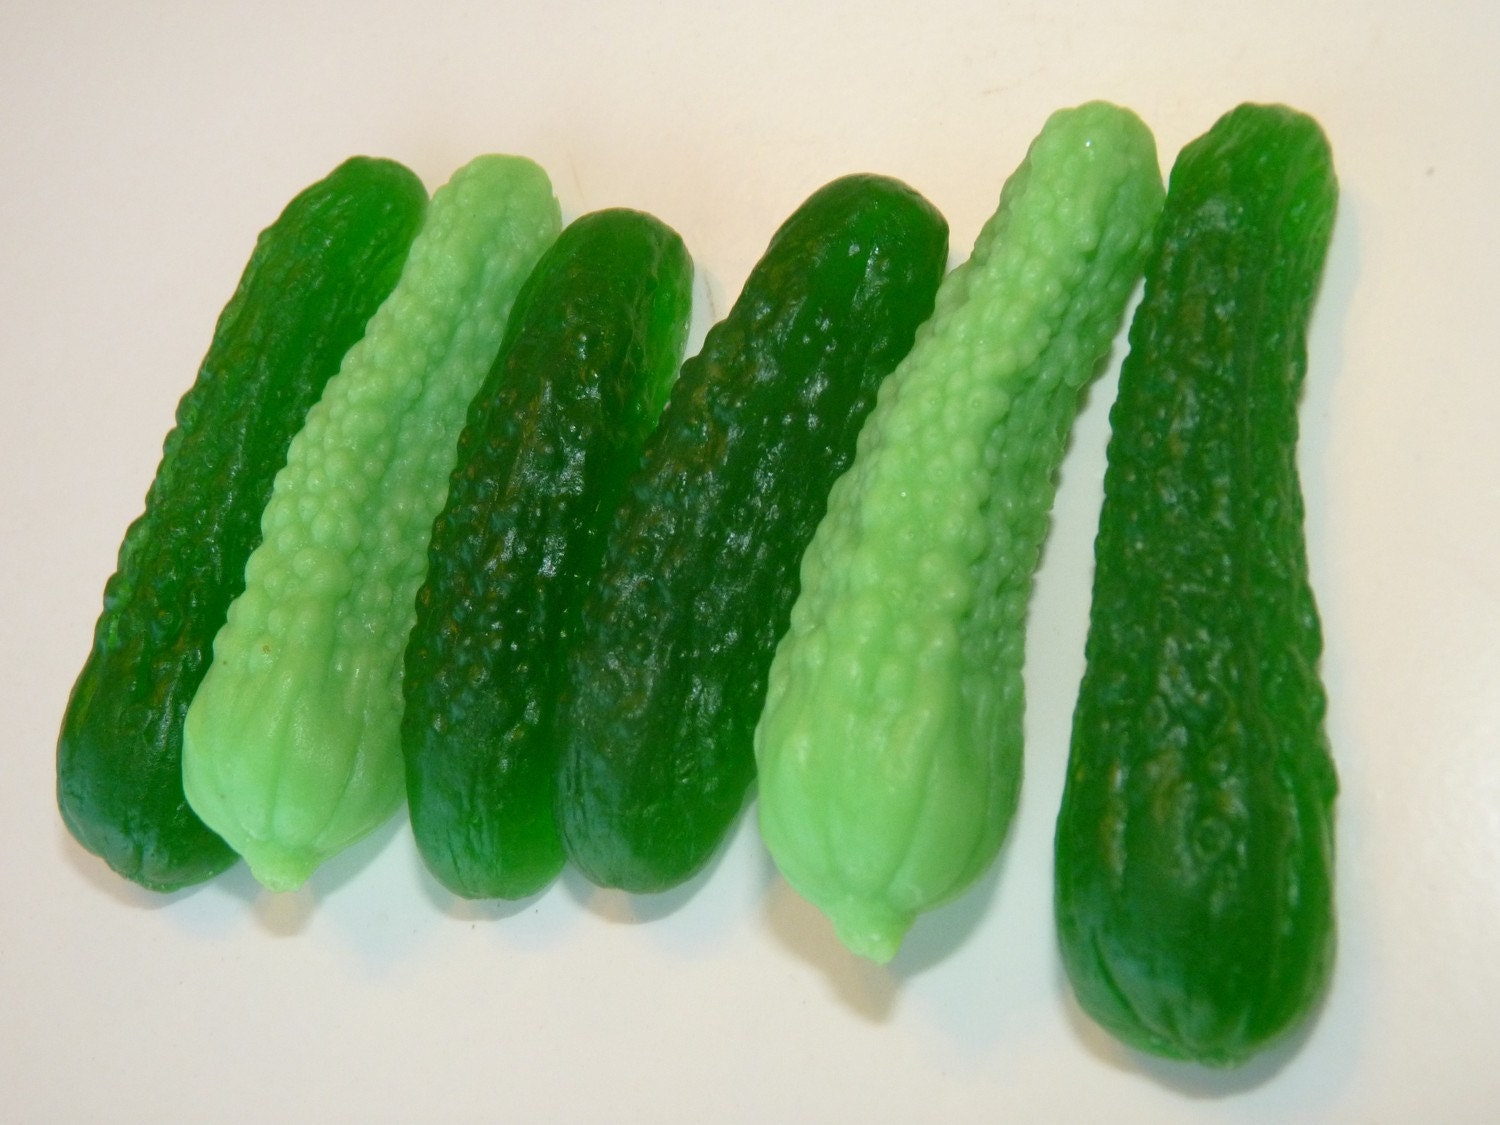 Gherkin Pickle